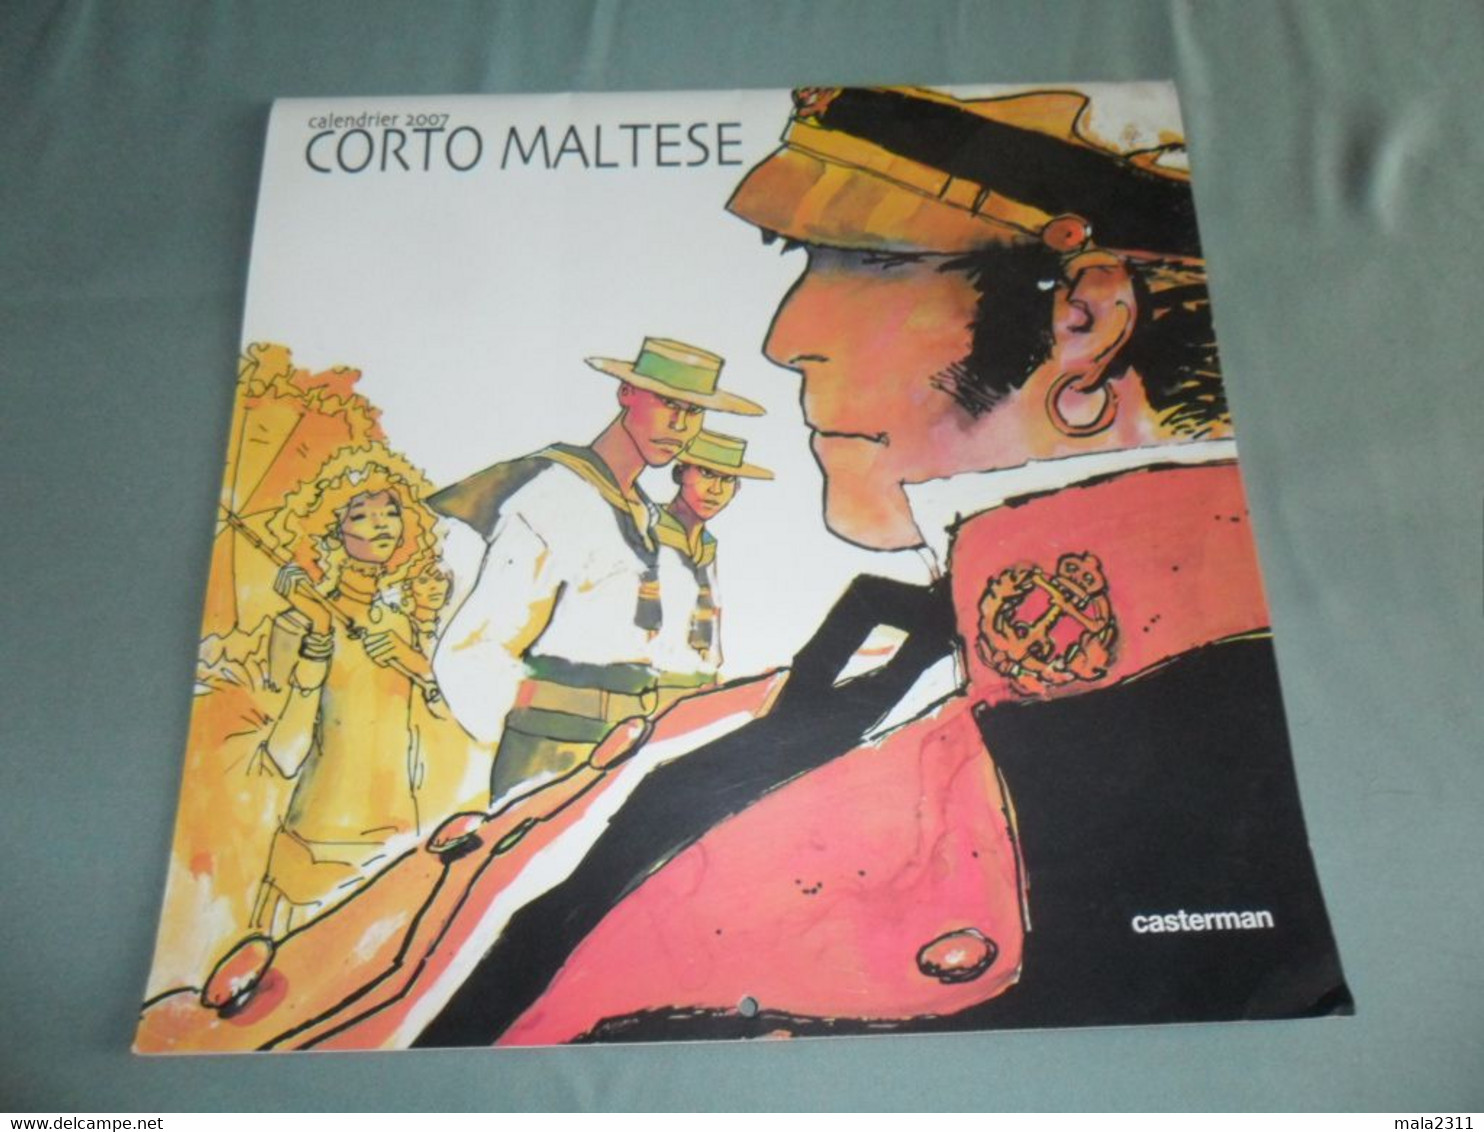 CORTO MALTESE - HUGO PRATT  /  CALENDRIER 2007 ..... / CASTERMAN - Agendas & Calendarios